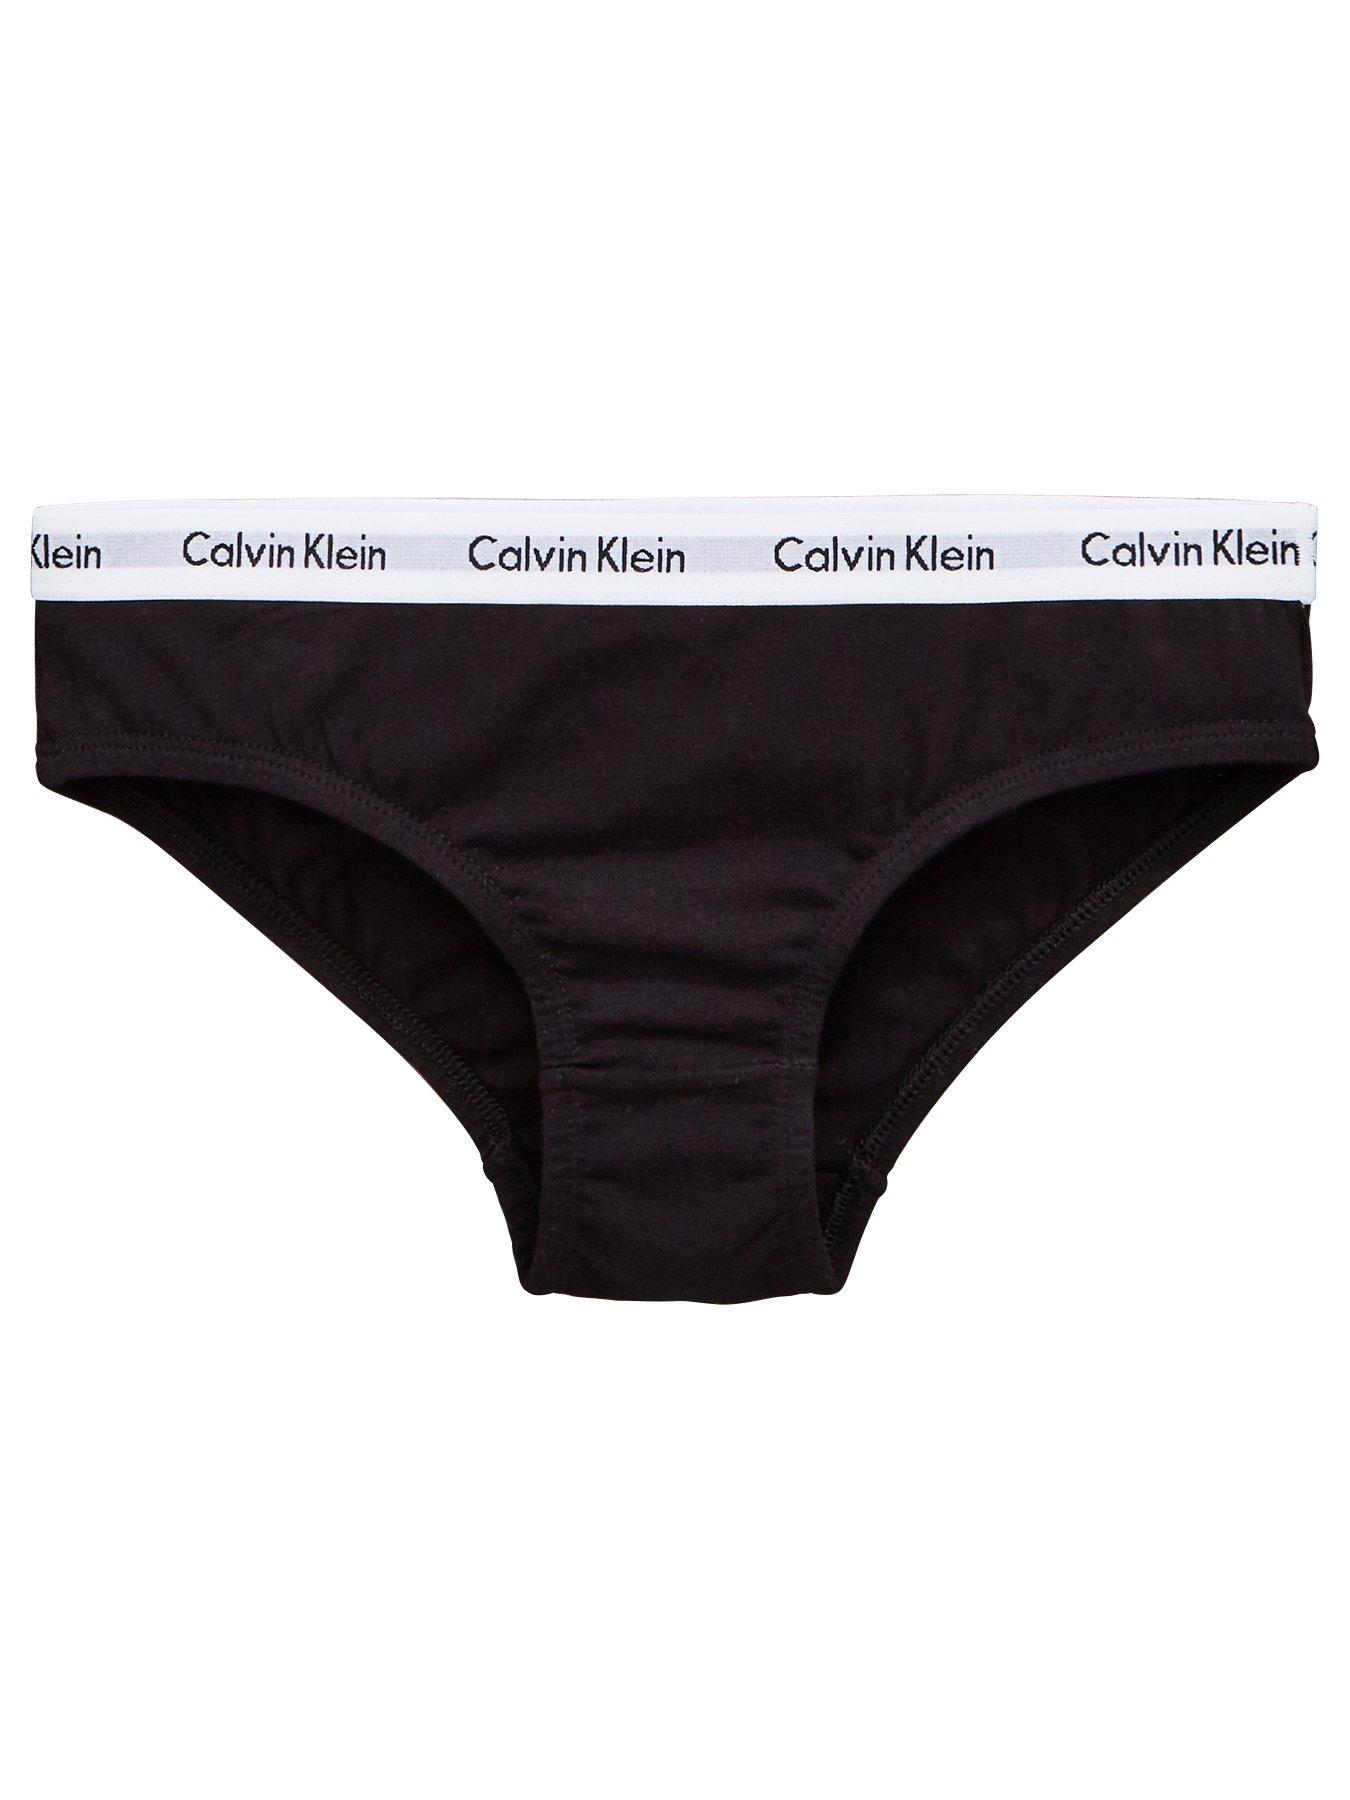 BEBE 2 OR 3pcs Women Intimate Panties Lingerie Briefs Underwear ☆USA SELLER☆